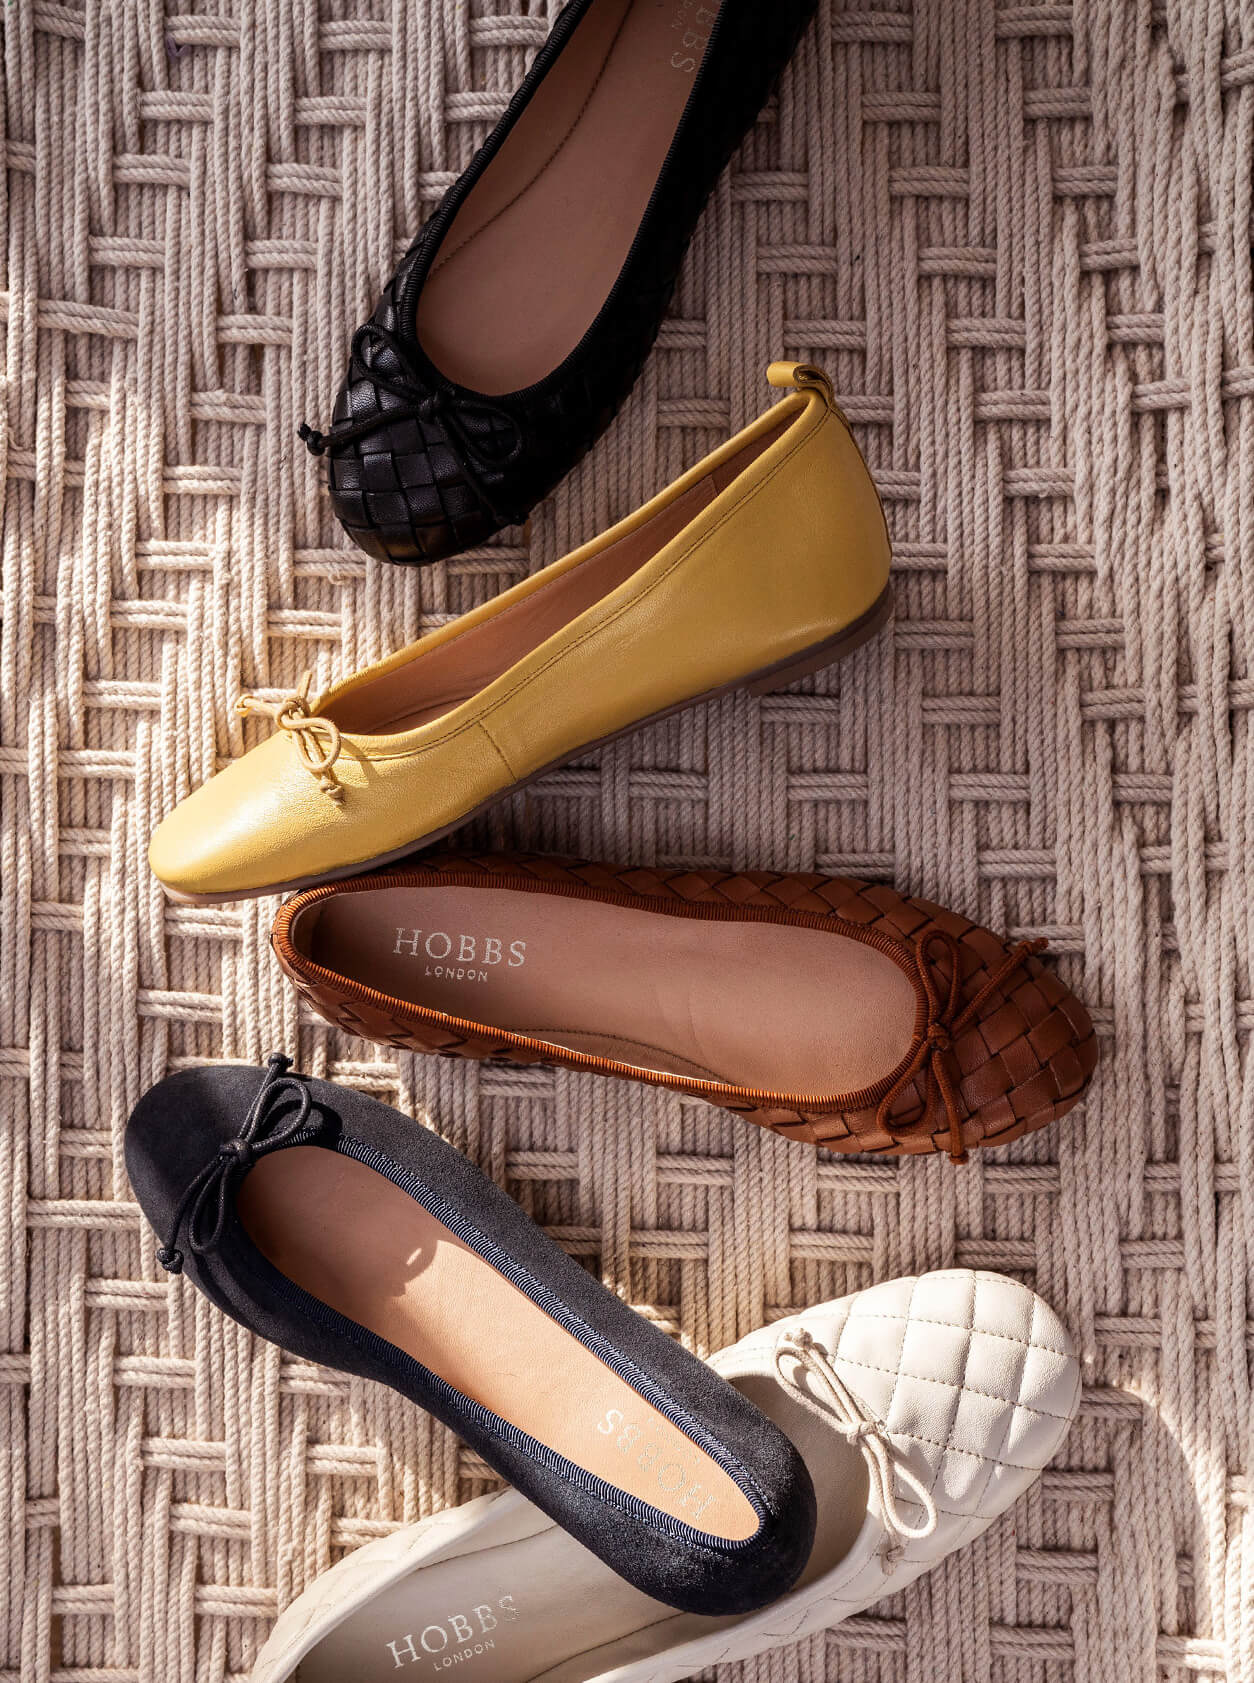 Hobbs selection of ballerina flat shoes for women.